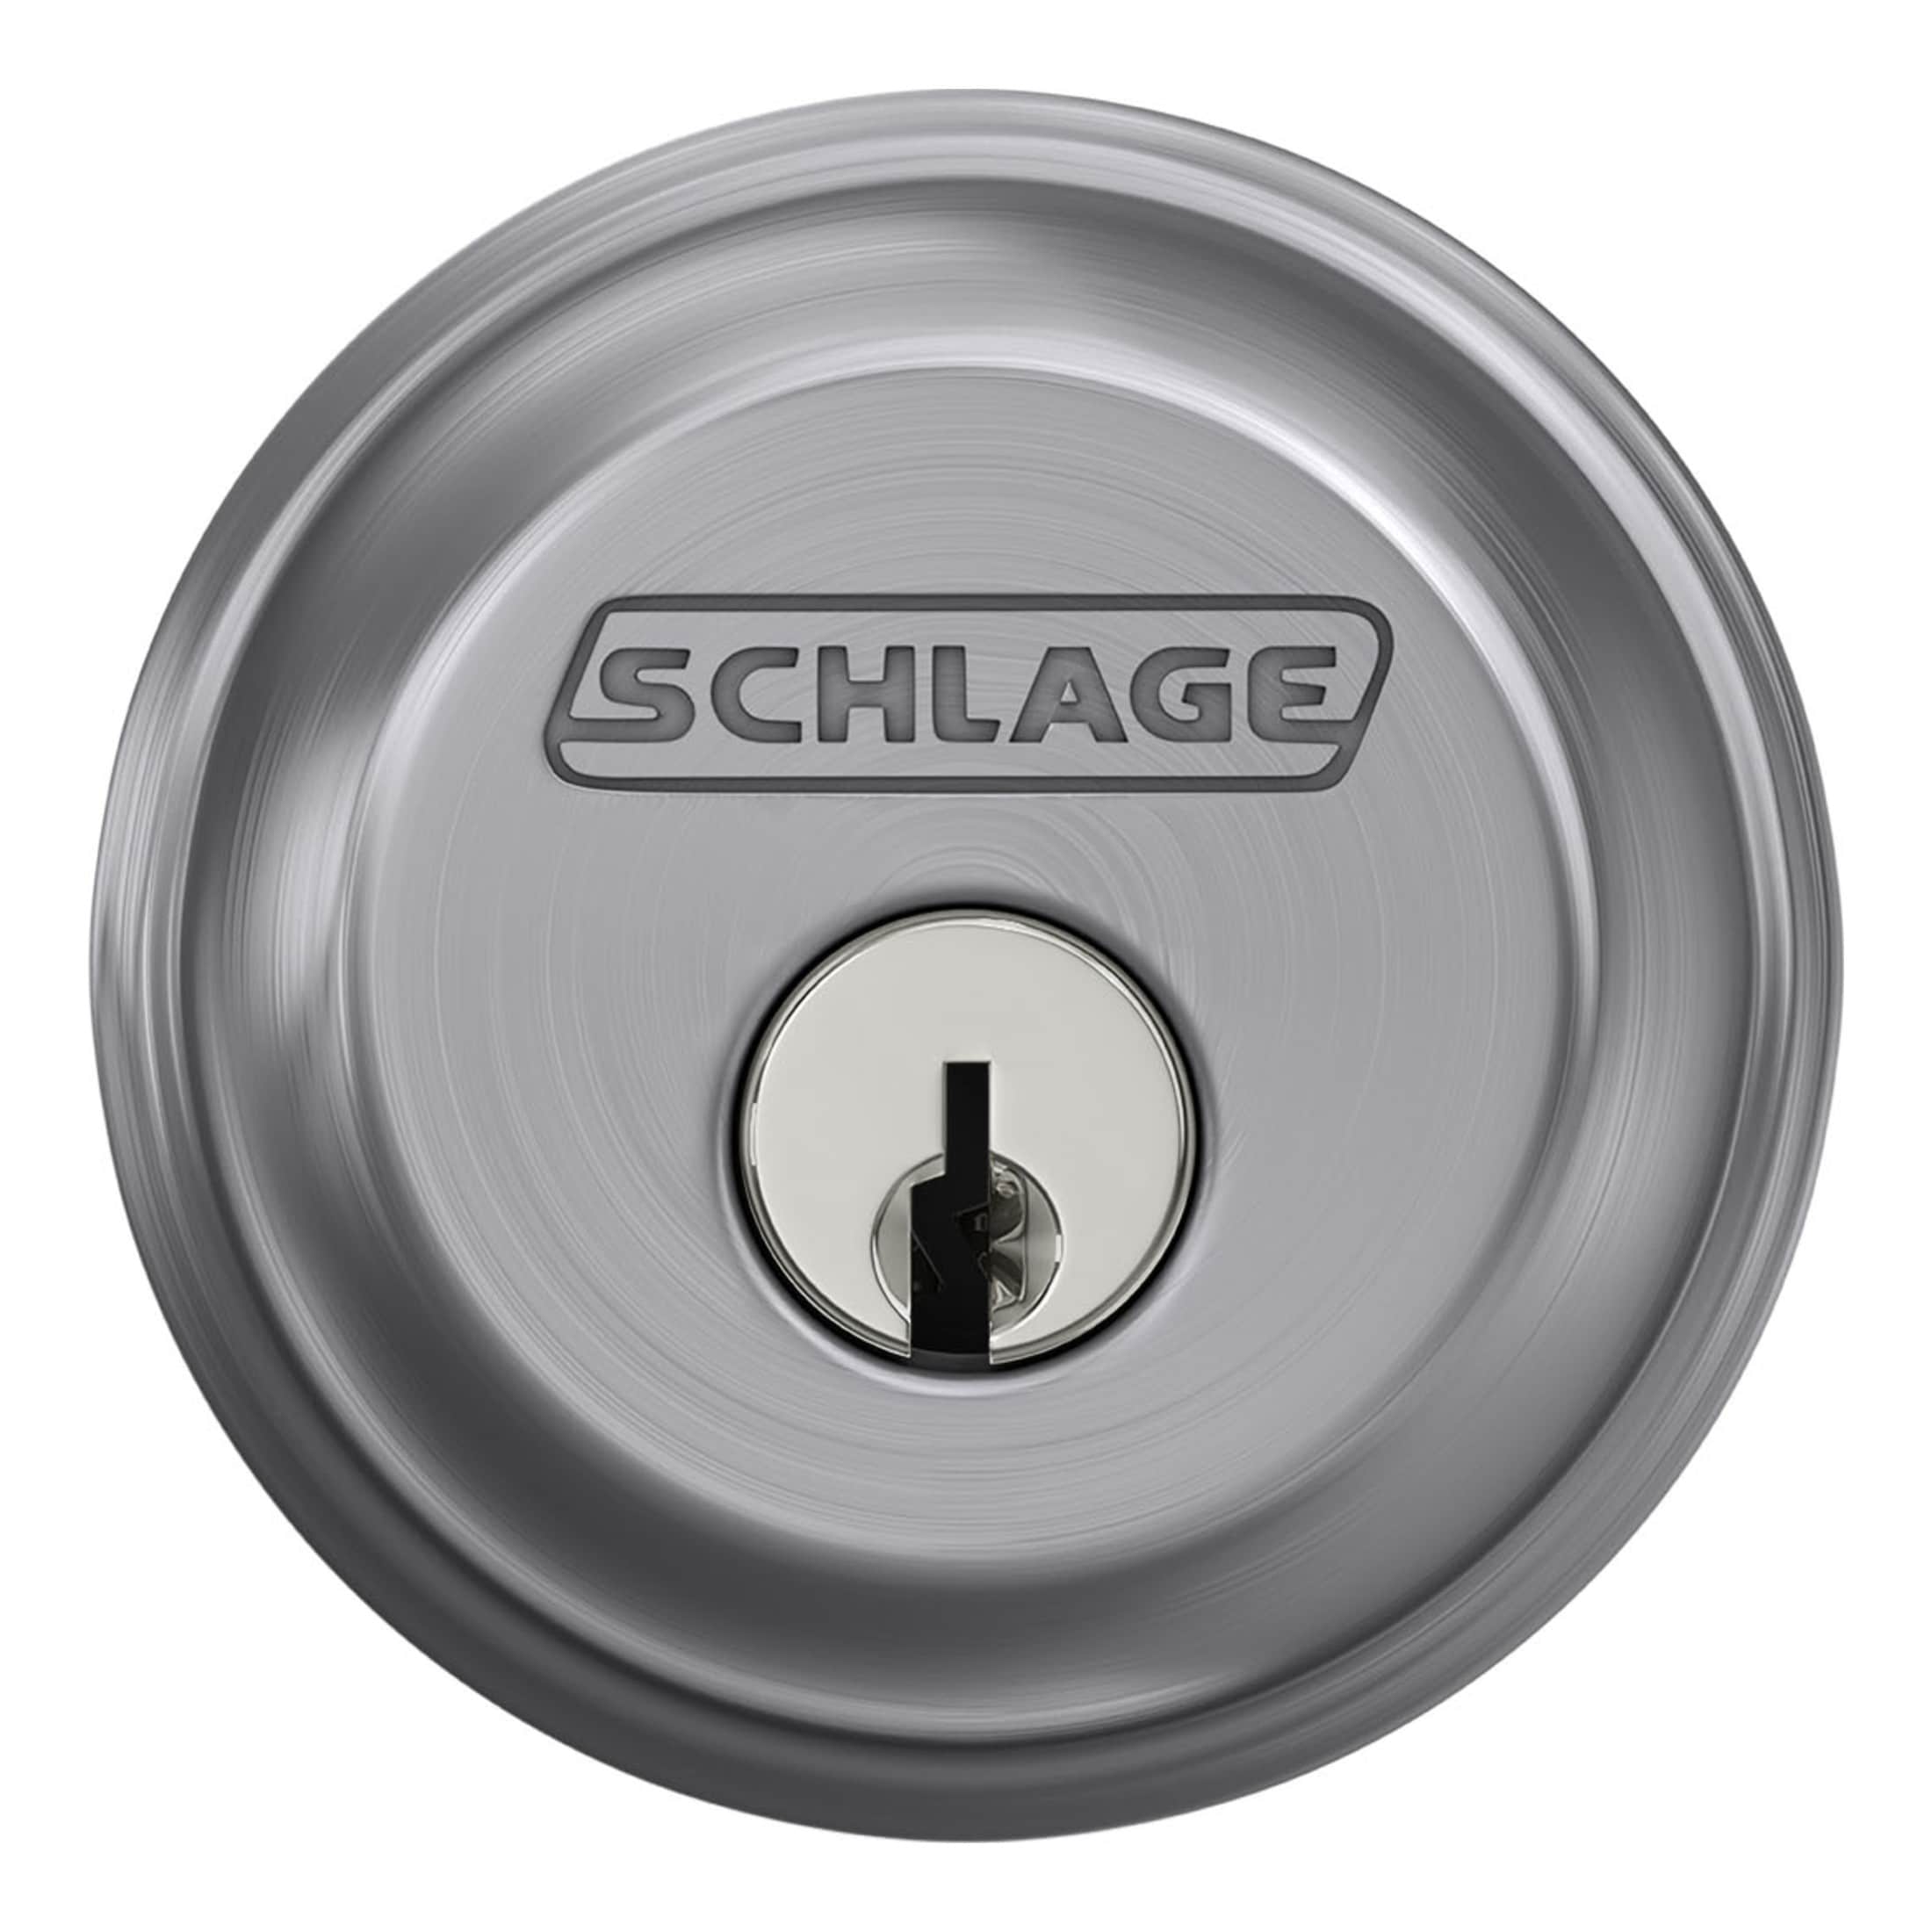 Schlage Part # 12-288 626 - Schlage B Series 12-888 Universal Square Corner  Satin Chrome Replacement Deadbolt Latch - Cylinder Accessories - Home Depot  Pro